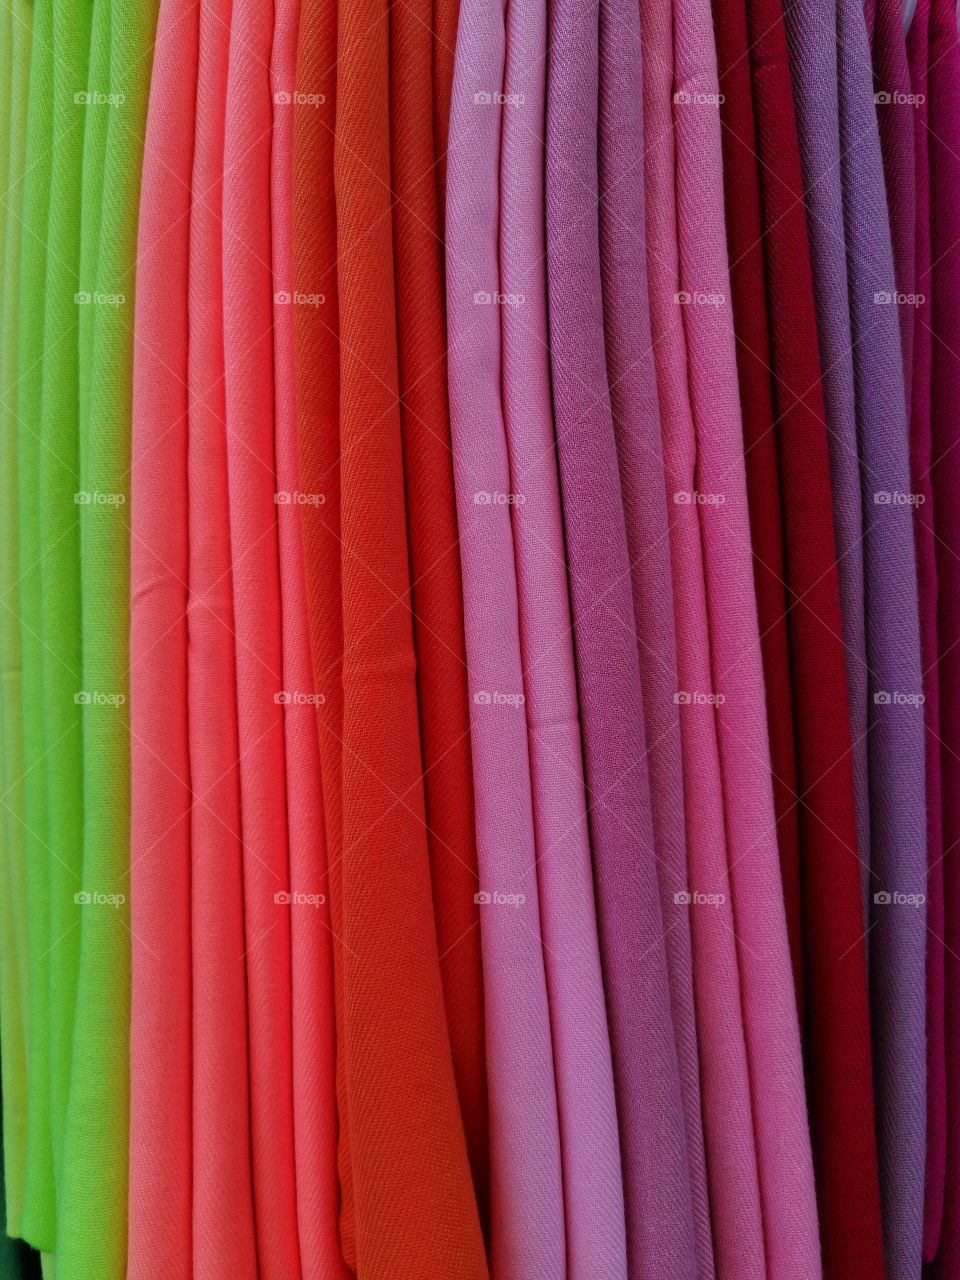 Fabric rainbow